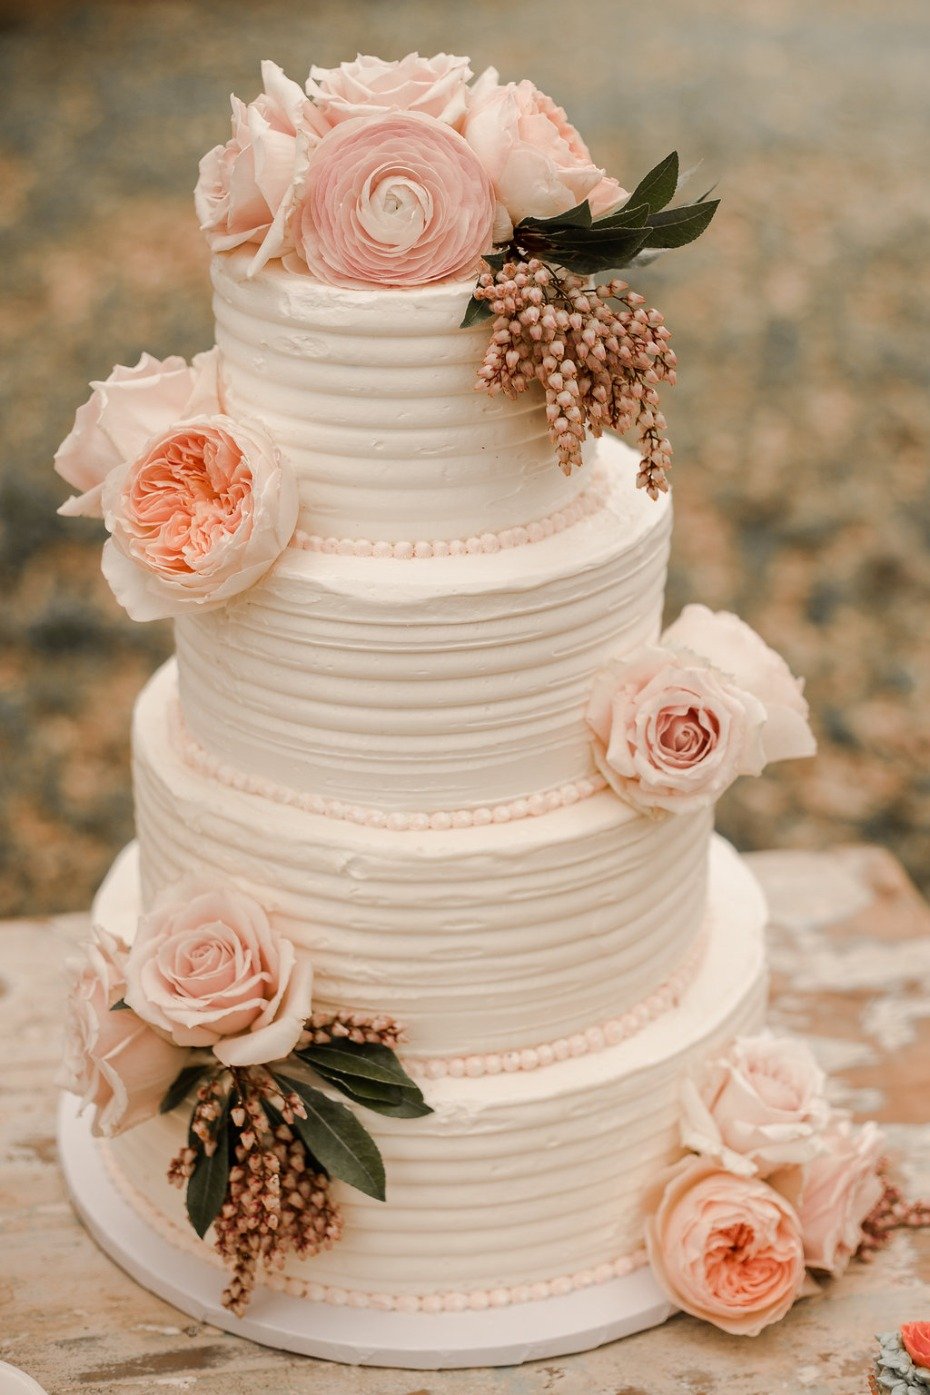 Gorgeous white wedding cake with flowers